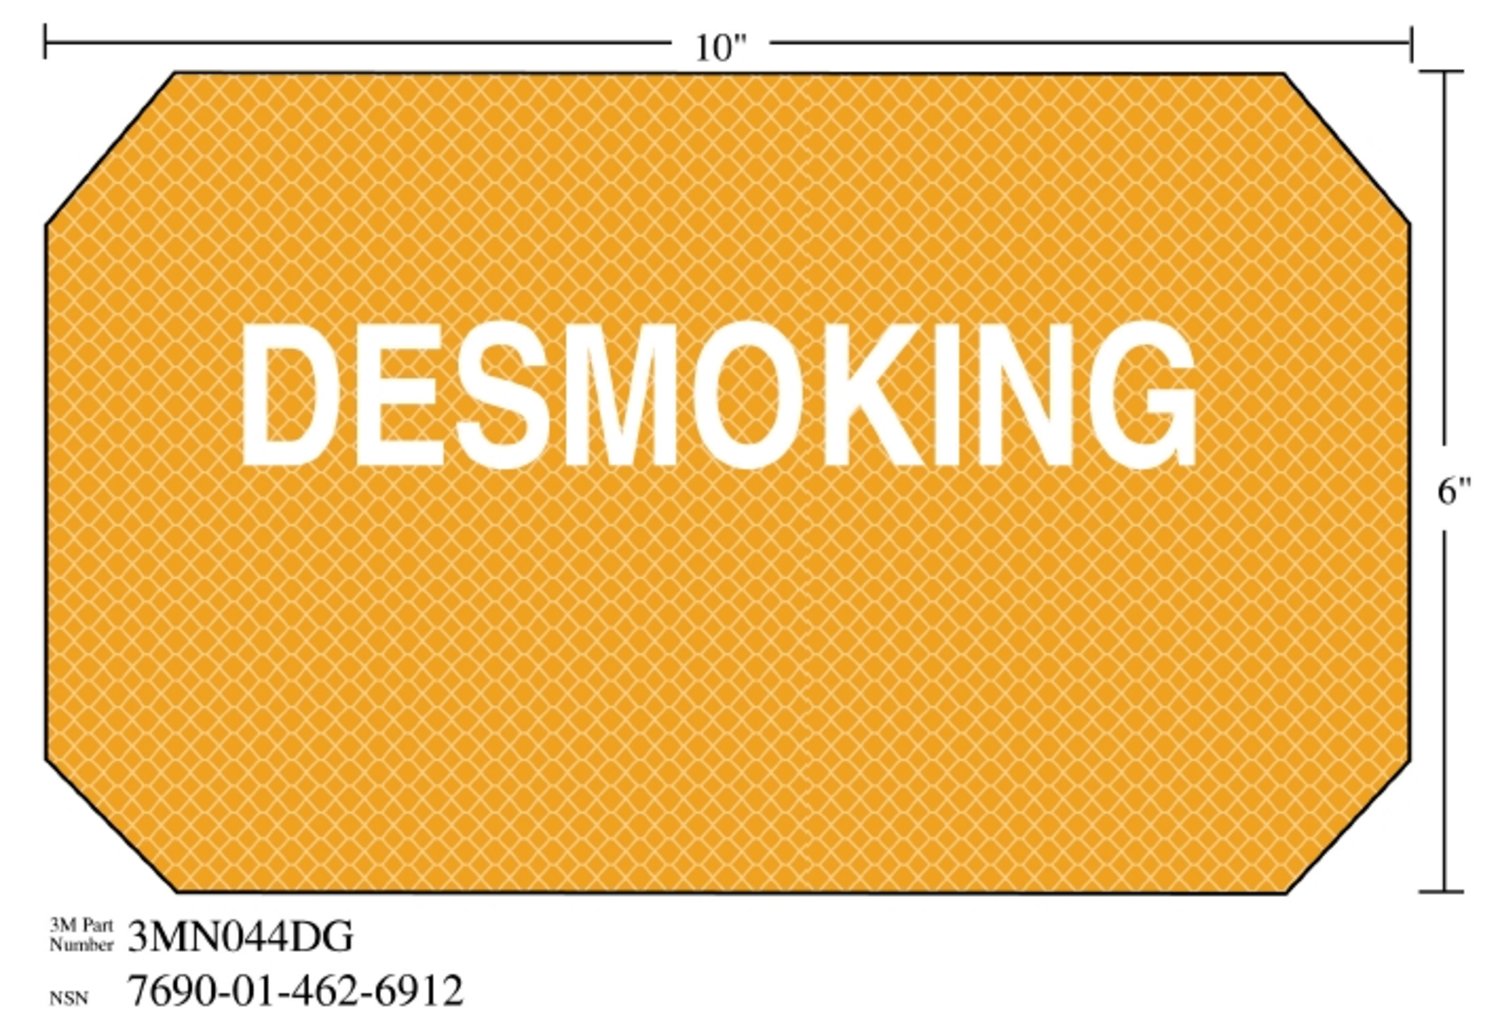 7010343535 - 3M Diamond Grade Damage Control Sign 3MN044DG, "DESMOKING", 10 in x 6
in, 10/Package